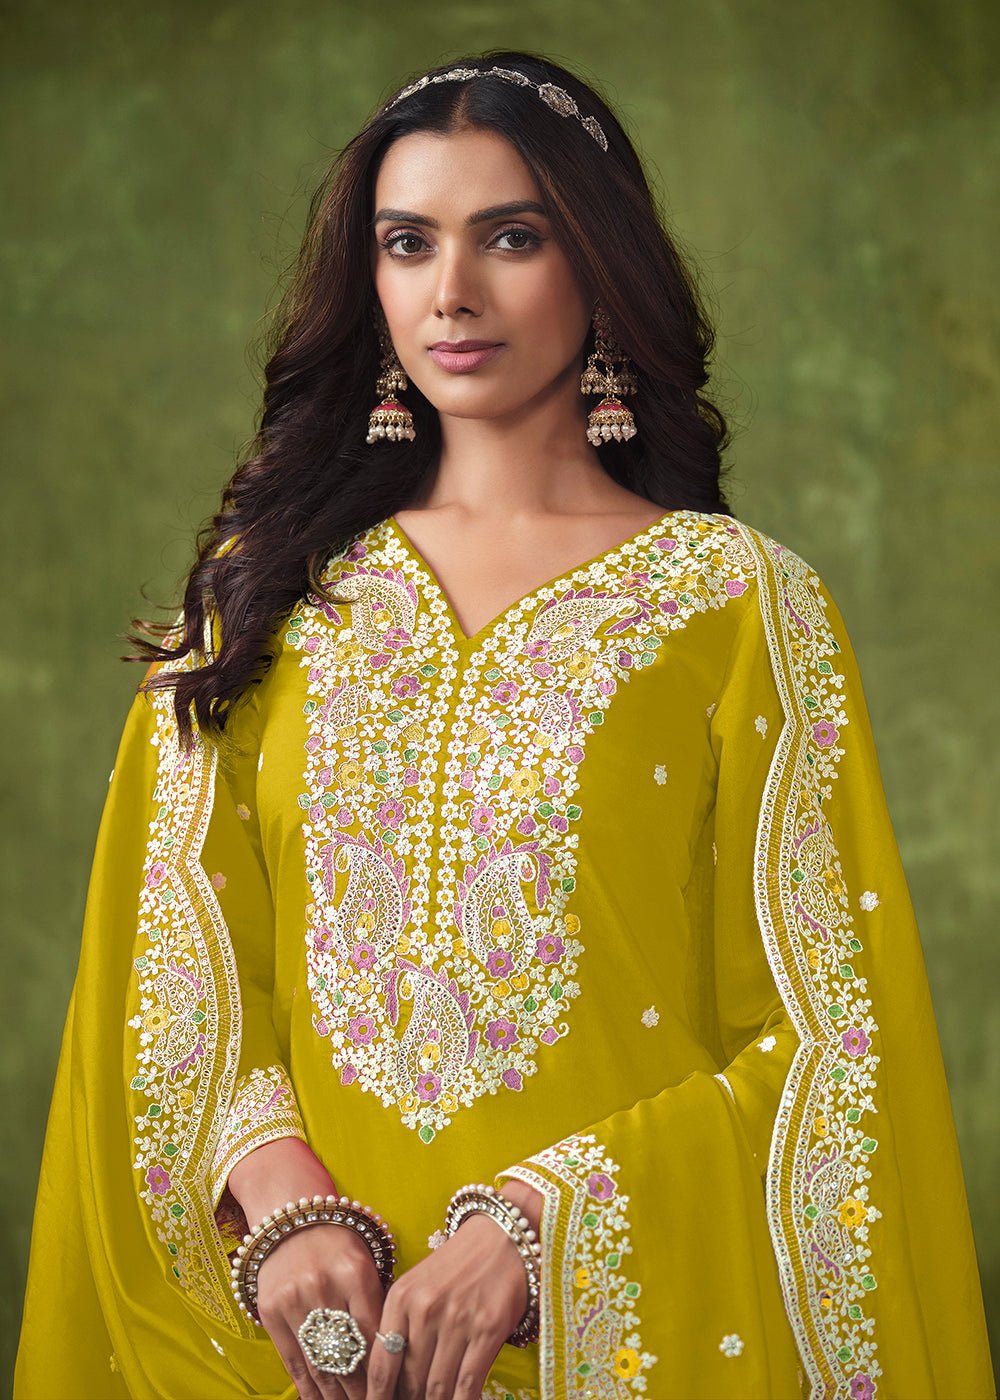 Buy Now Patiala Style Green Chanderi Silk Punjabi Salwar Suit Online in USA, UK, Canada, Germany, Australia & Worldwide at Empress Clothing. 